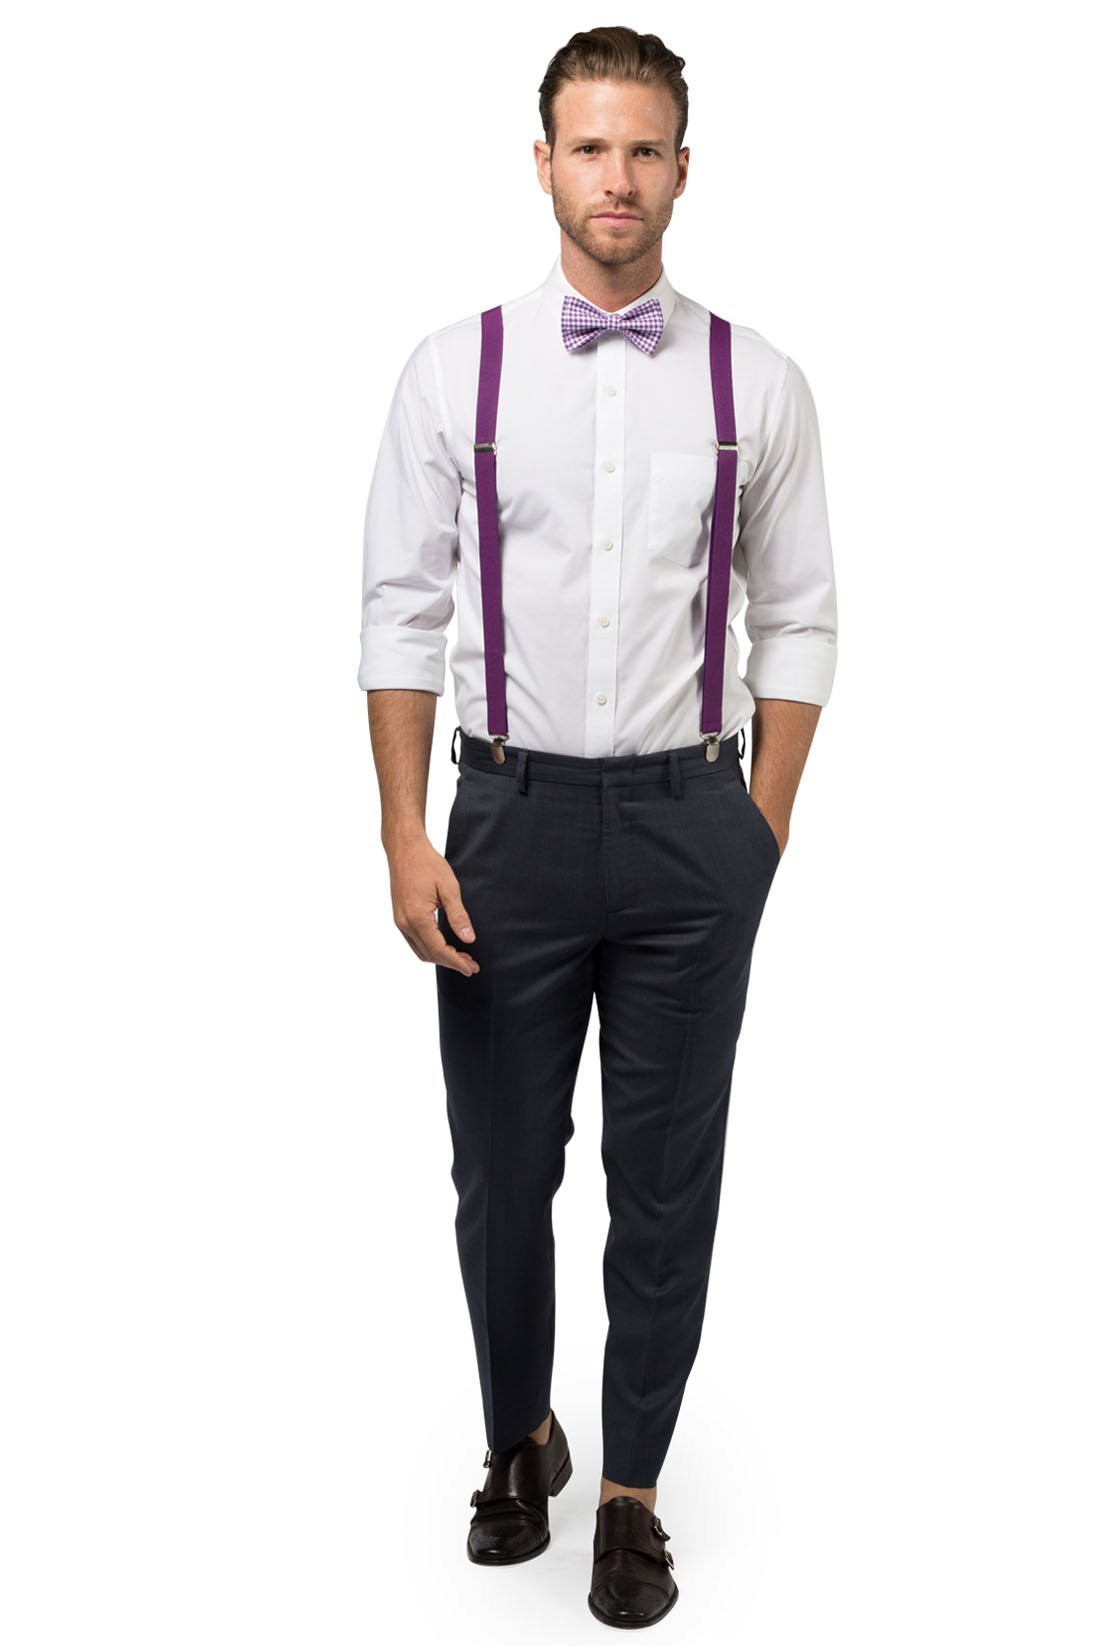 Eggplant Purple Suspenders & Gingham Purple Bow Tie